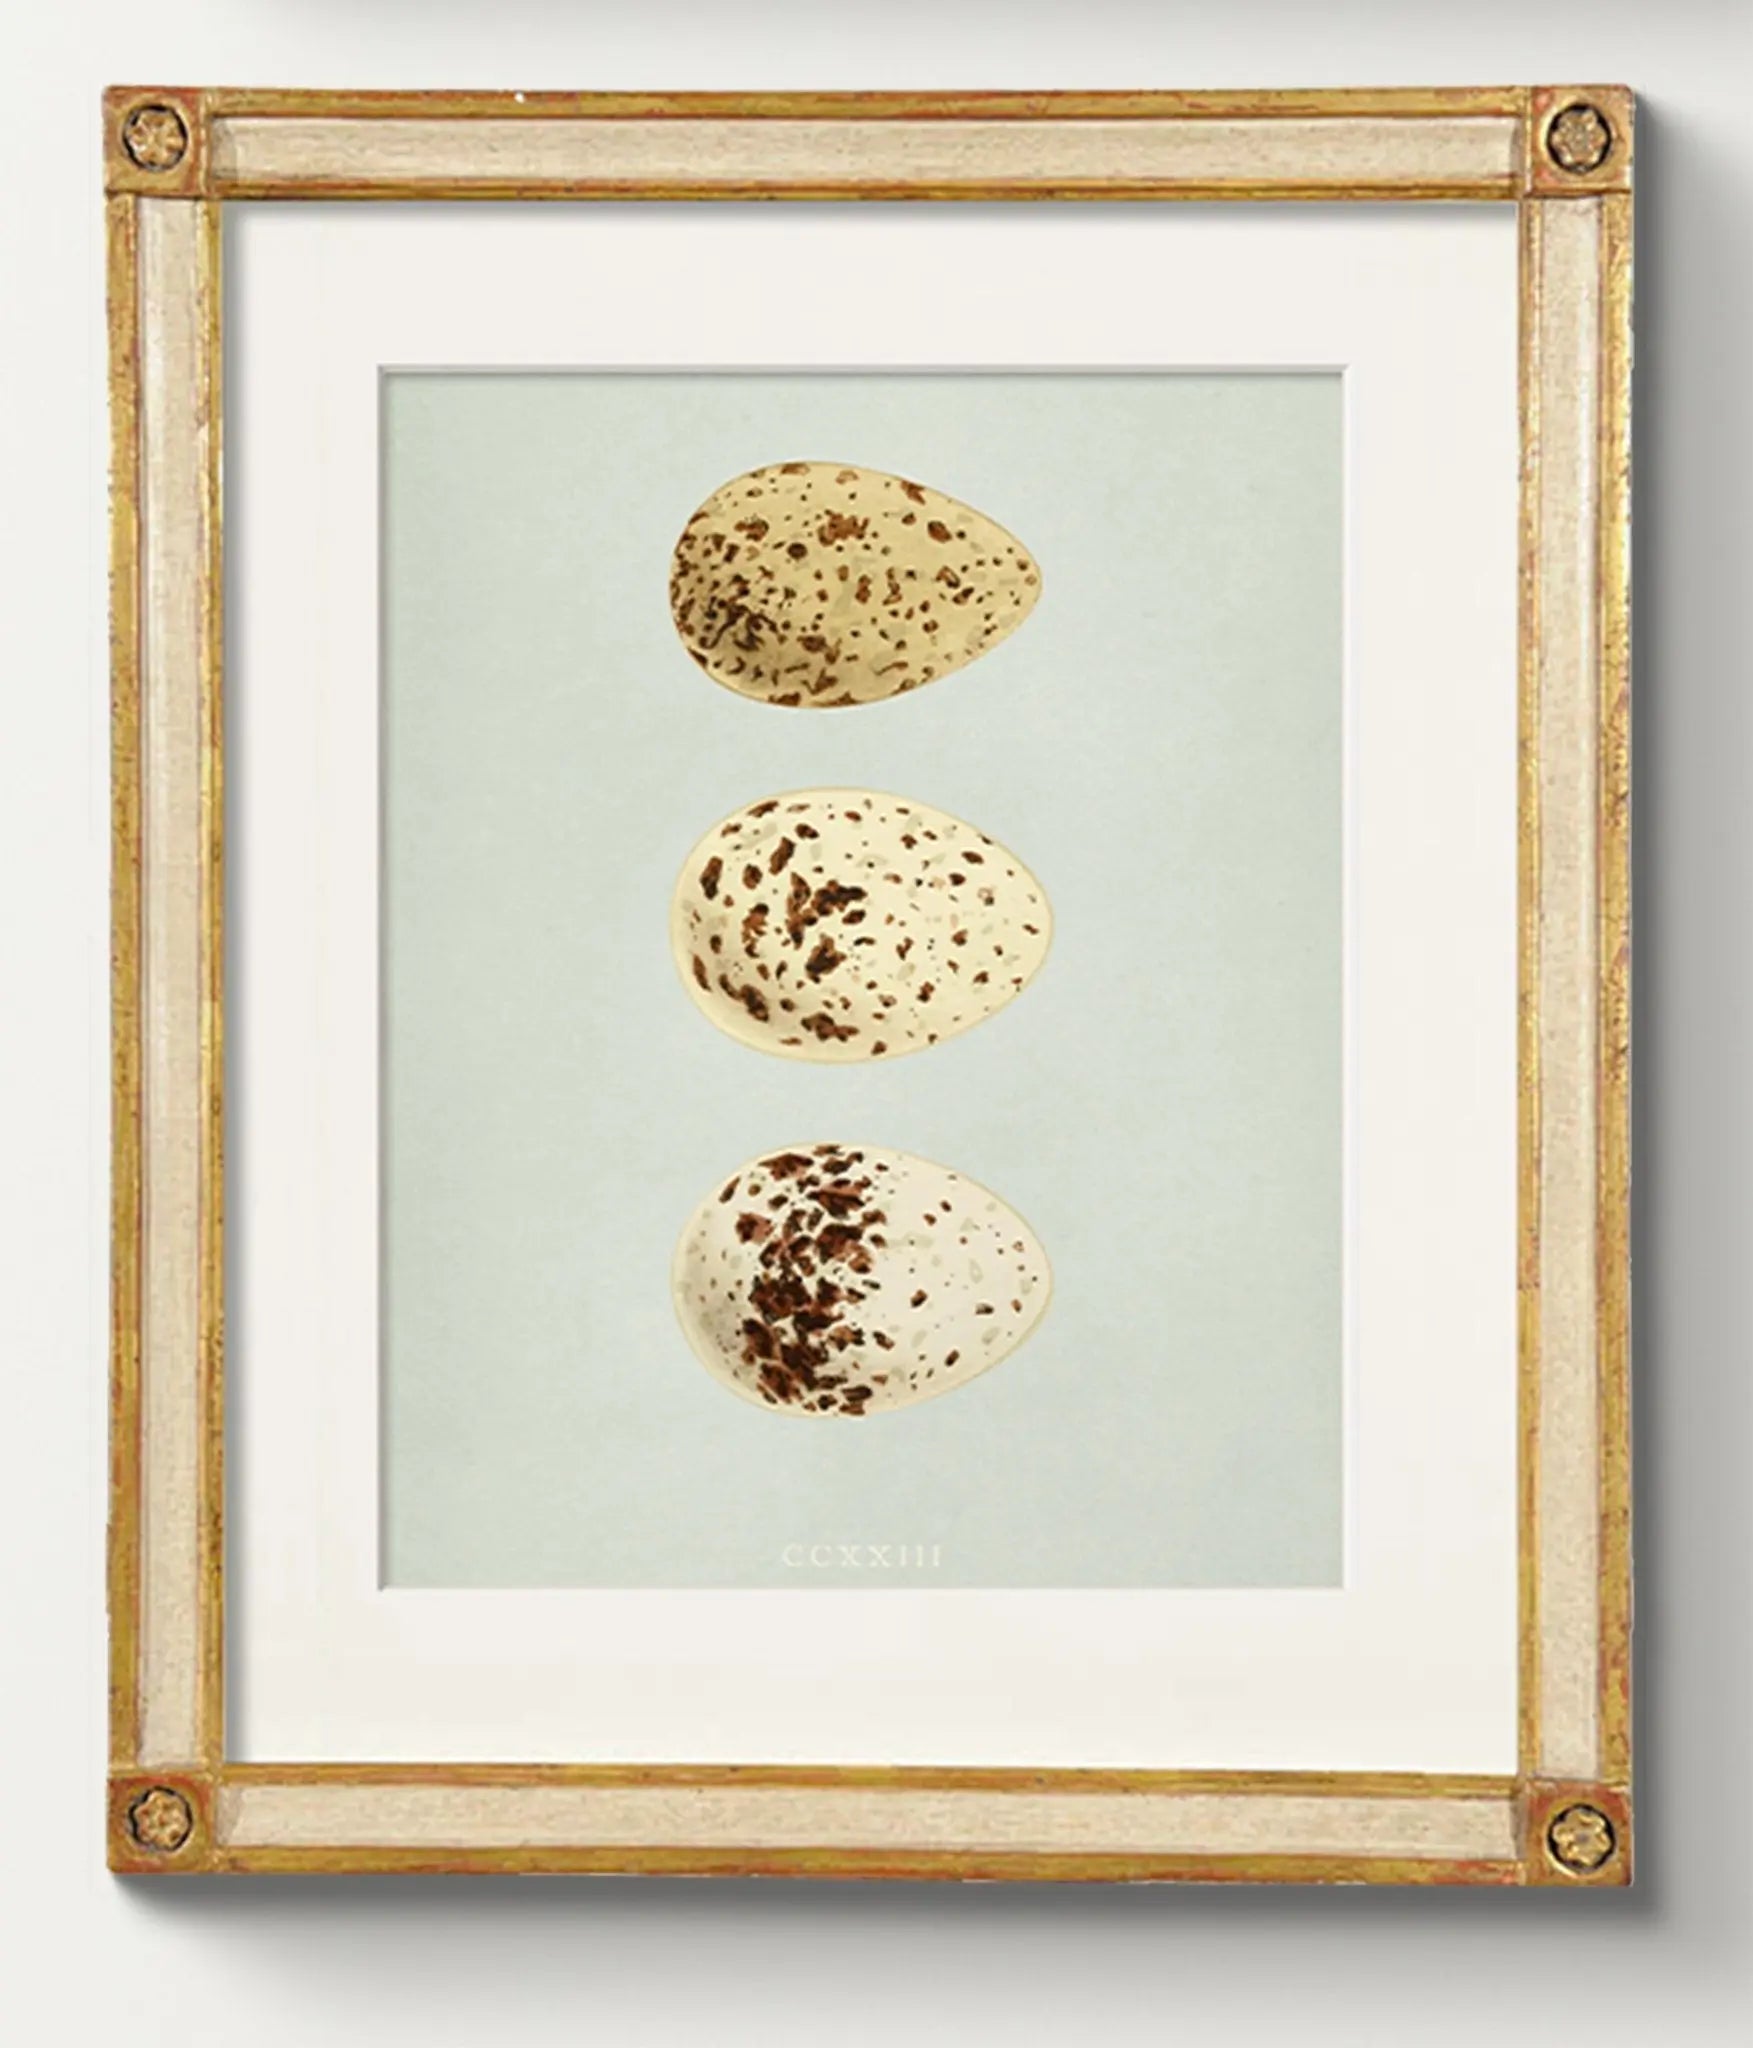 Woodblock Prints: Eggs of British Nesting Birds - Emblem Atelier